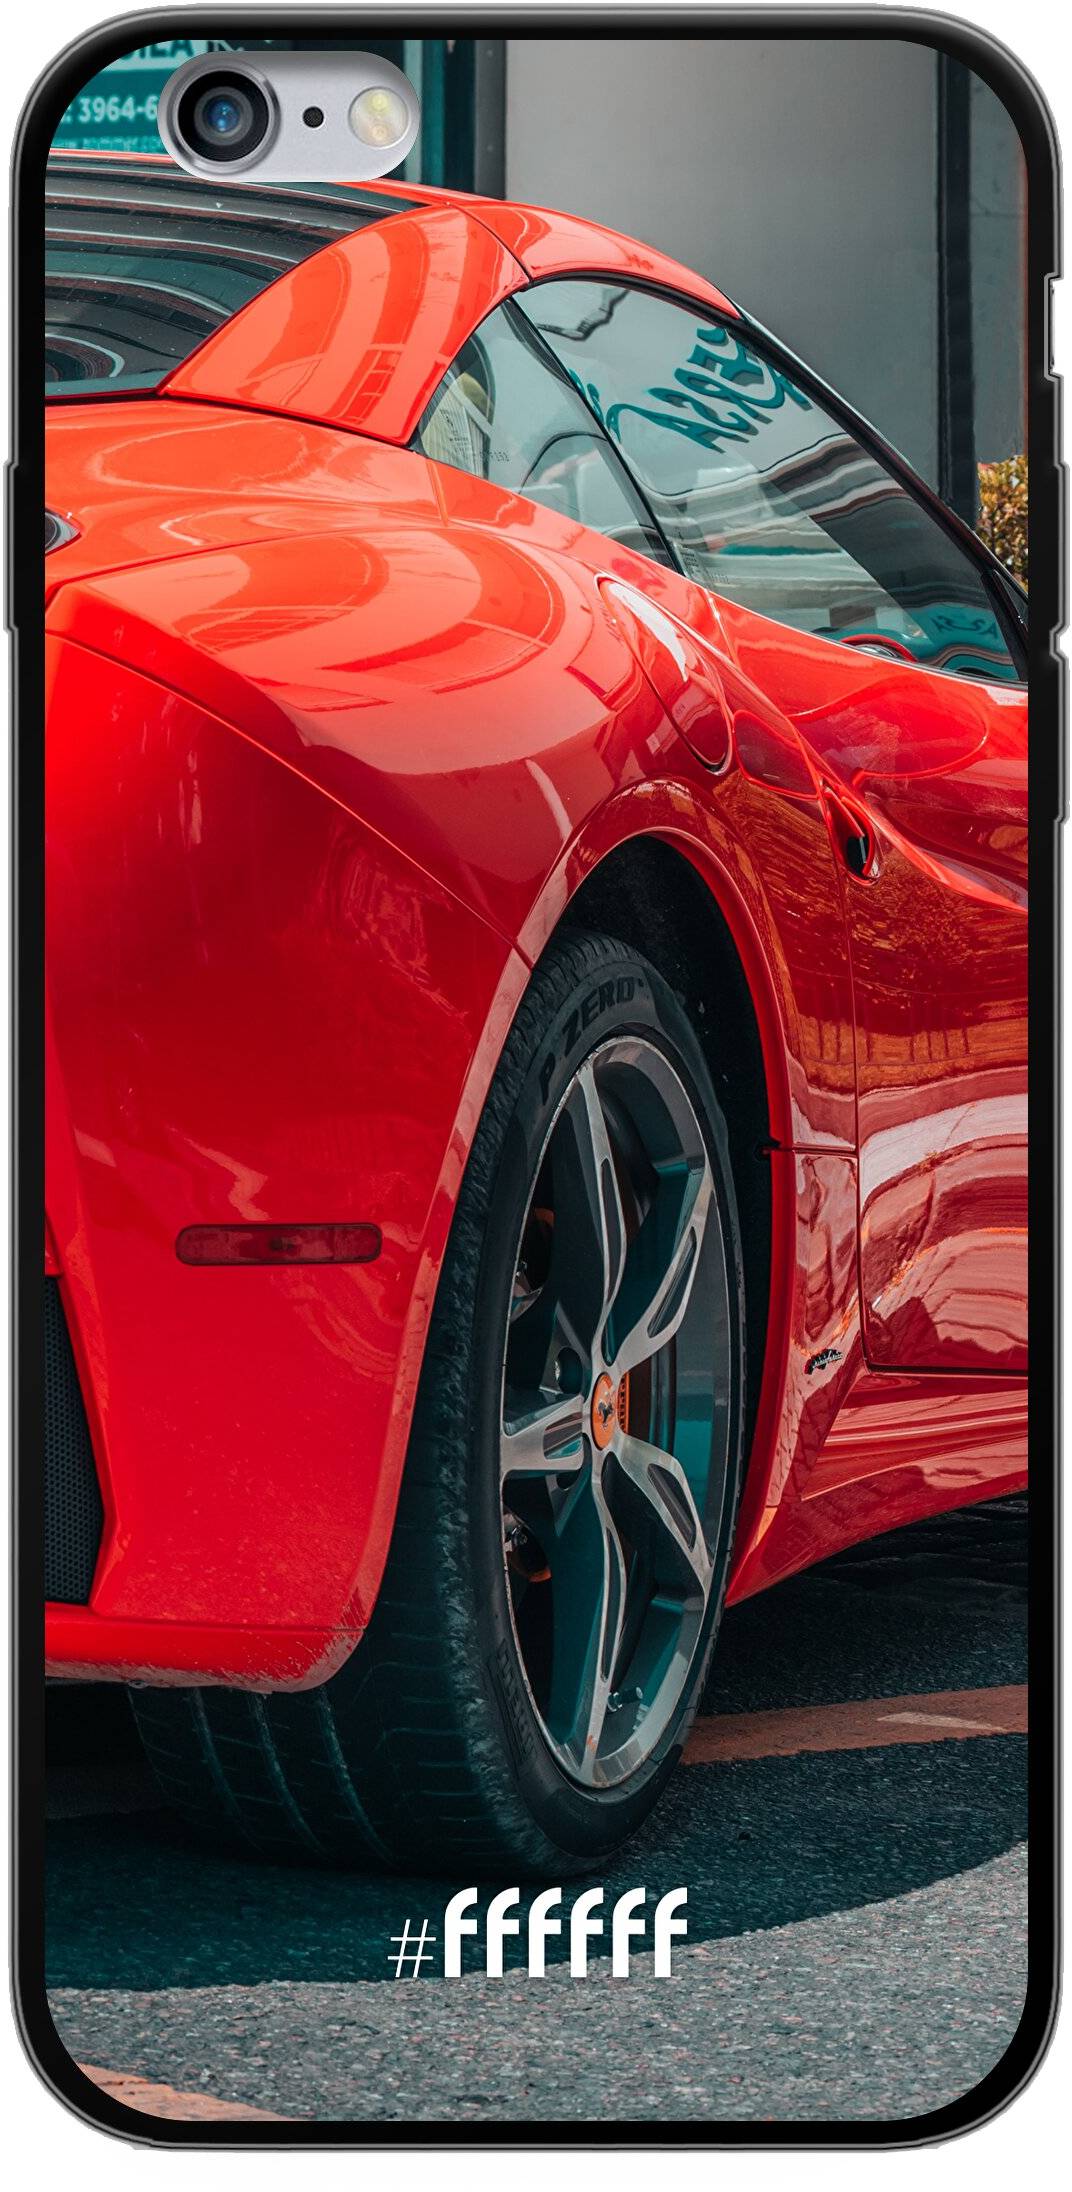 Ferrari iPhone 6s